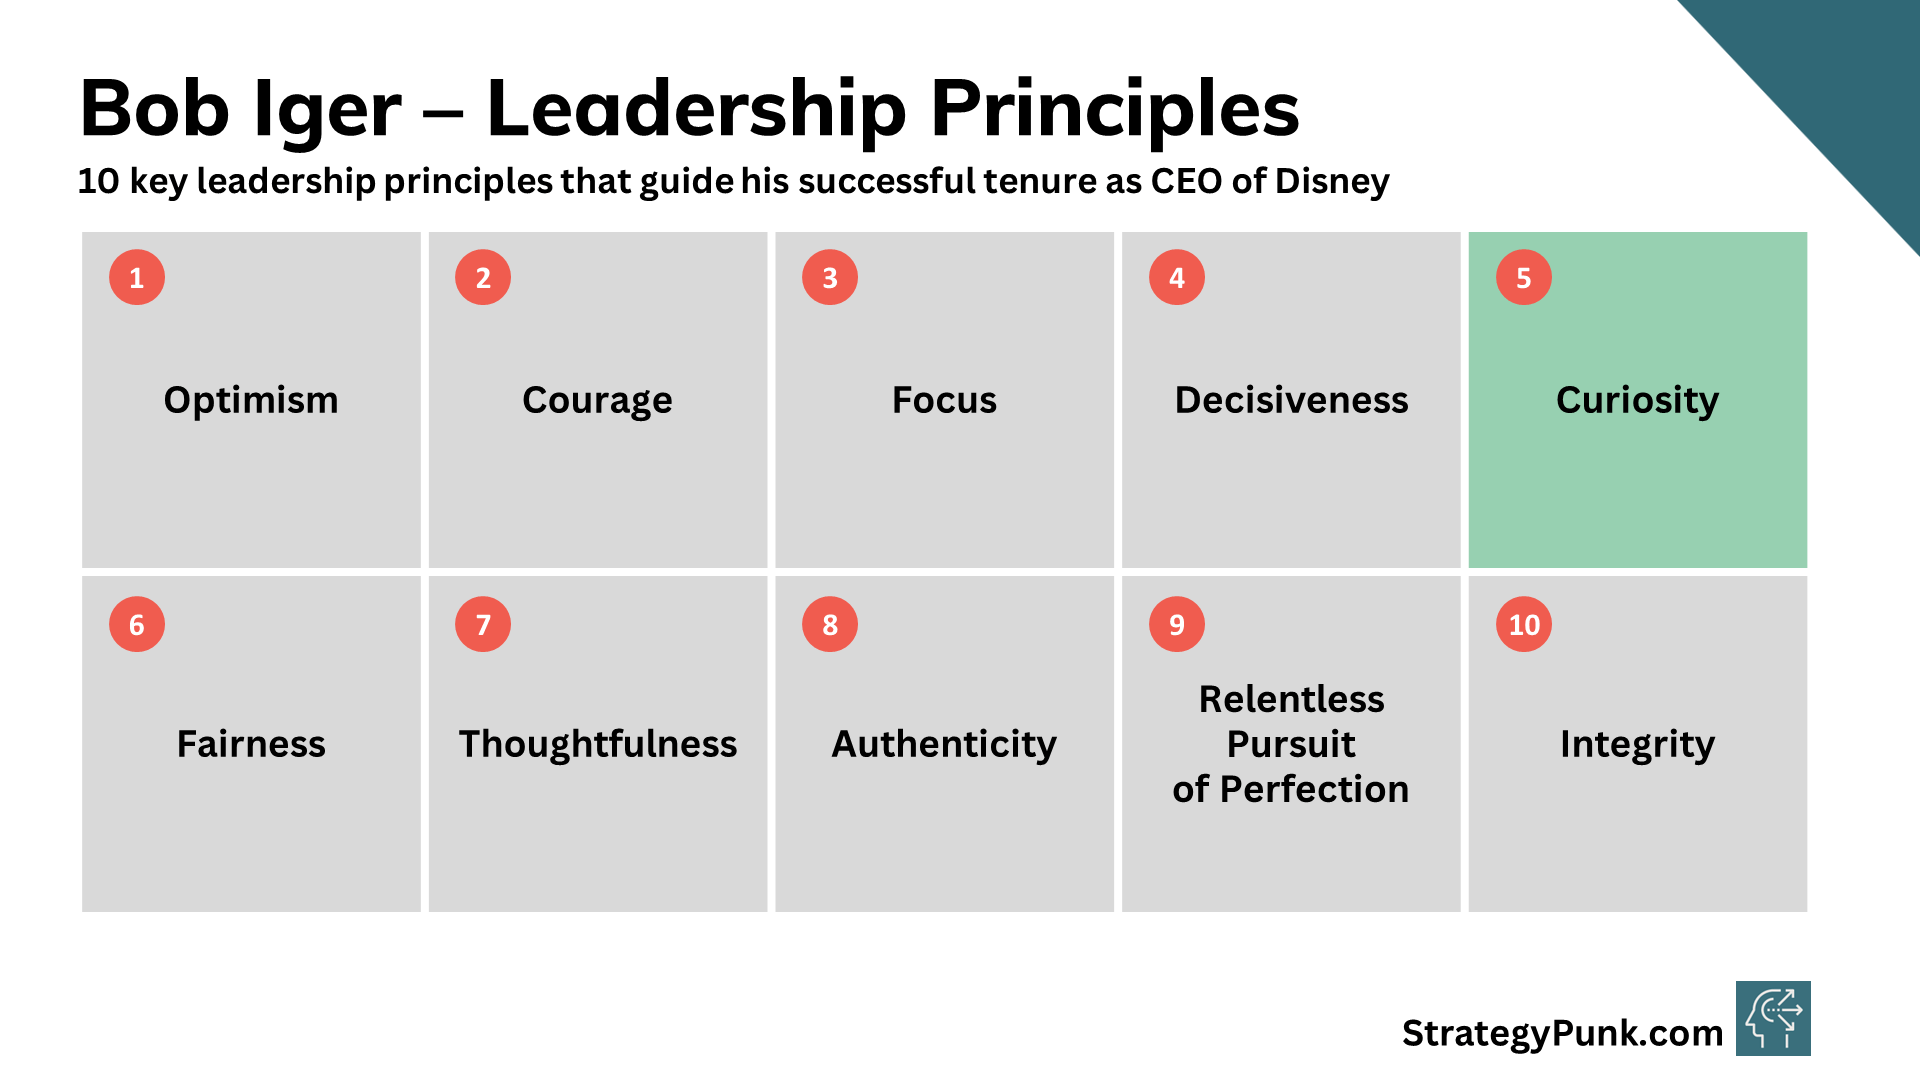 Bob Iger's 10 Key Leadership Principles for Disney's Success